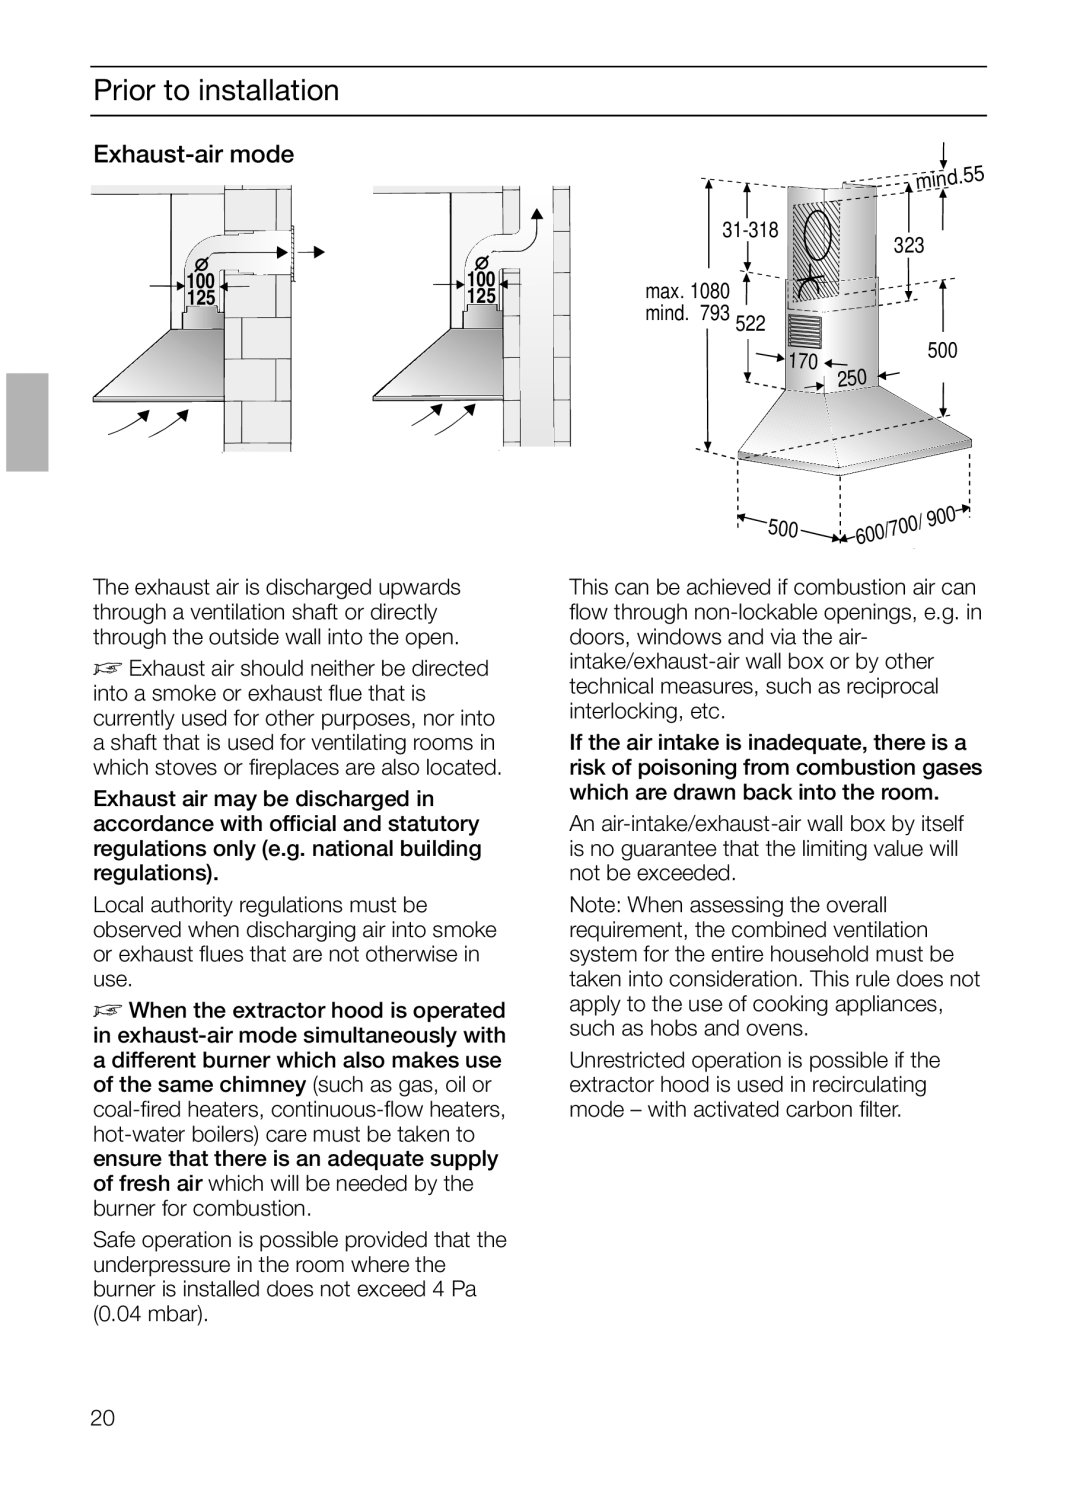 Bosch Appliances DKE 73, DKE 63 installation instructions Prior to installation, 31-318, mind, Exhaust-air mode 